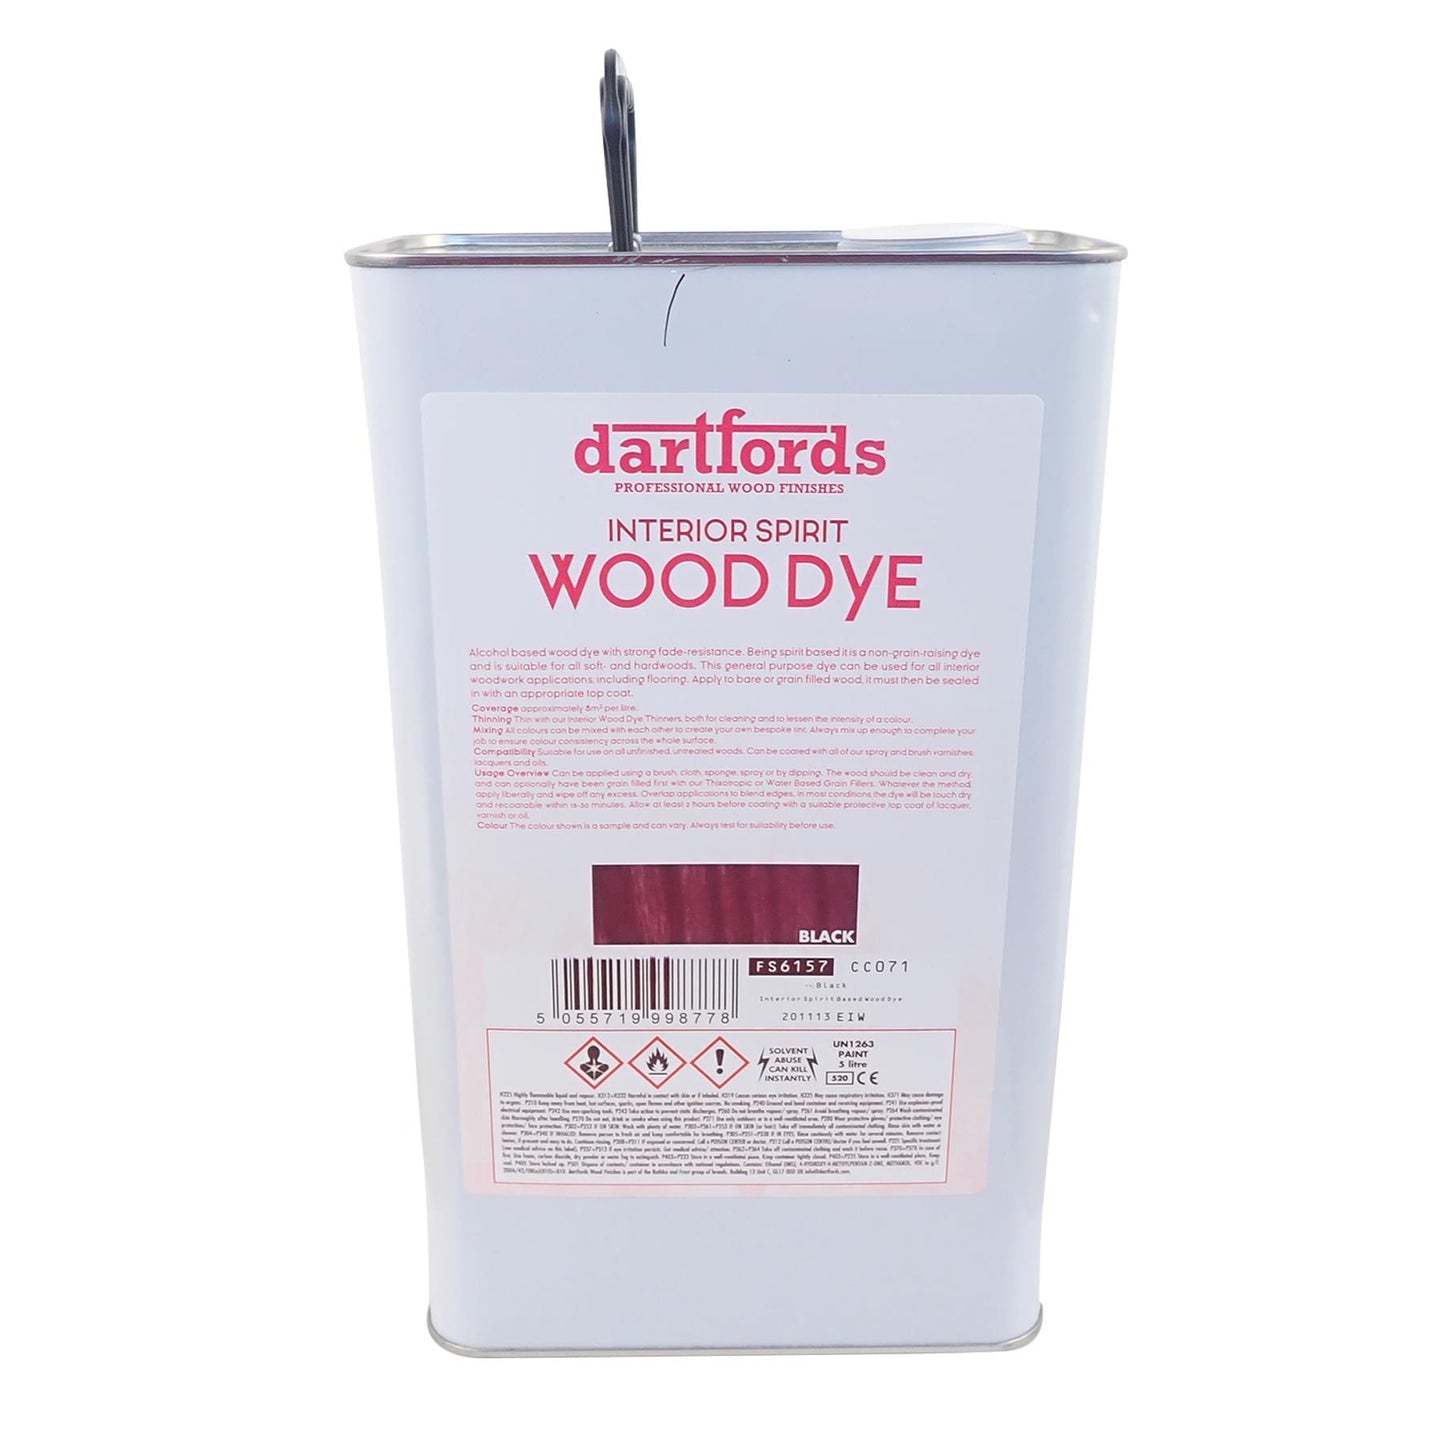 dartfords Black Interior Spirit Based Wood Dye - 5 litre Jerrycan